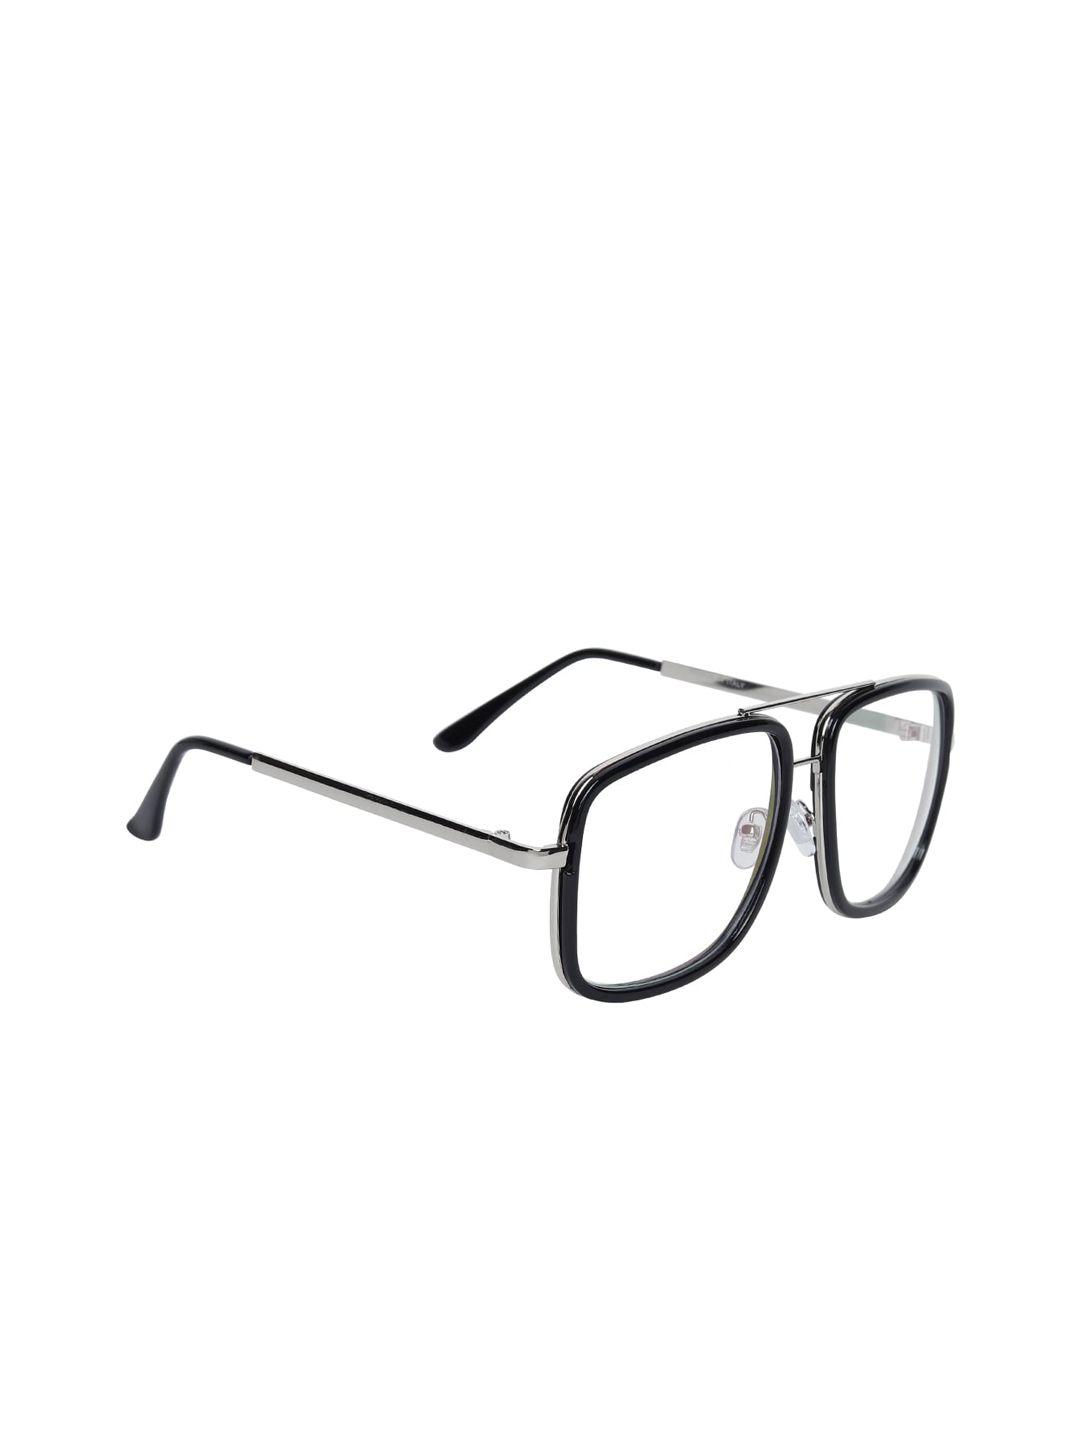 peter jones eyewear unisex black & silver-toned solid full rim square frames ta001s